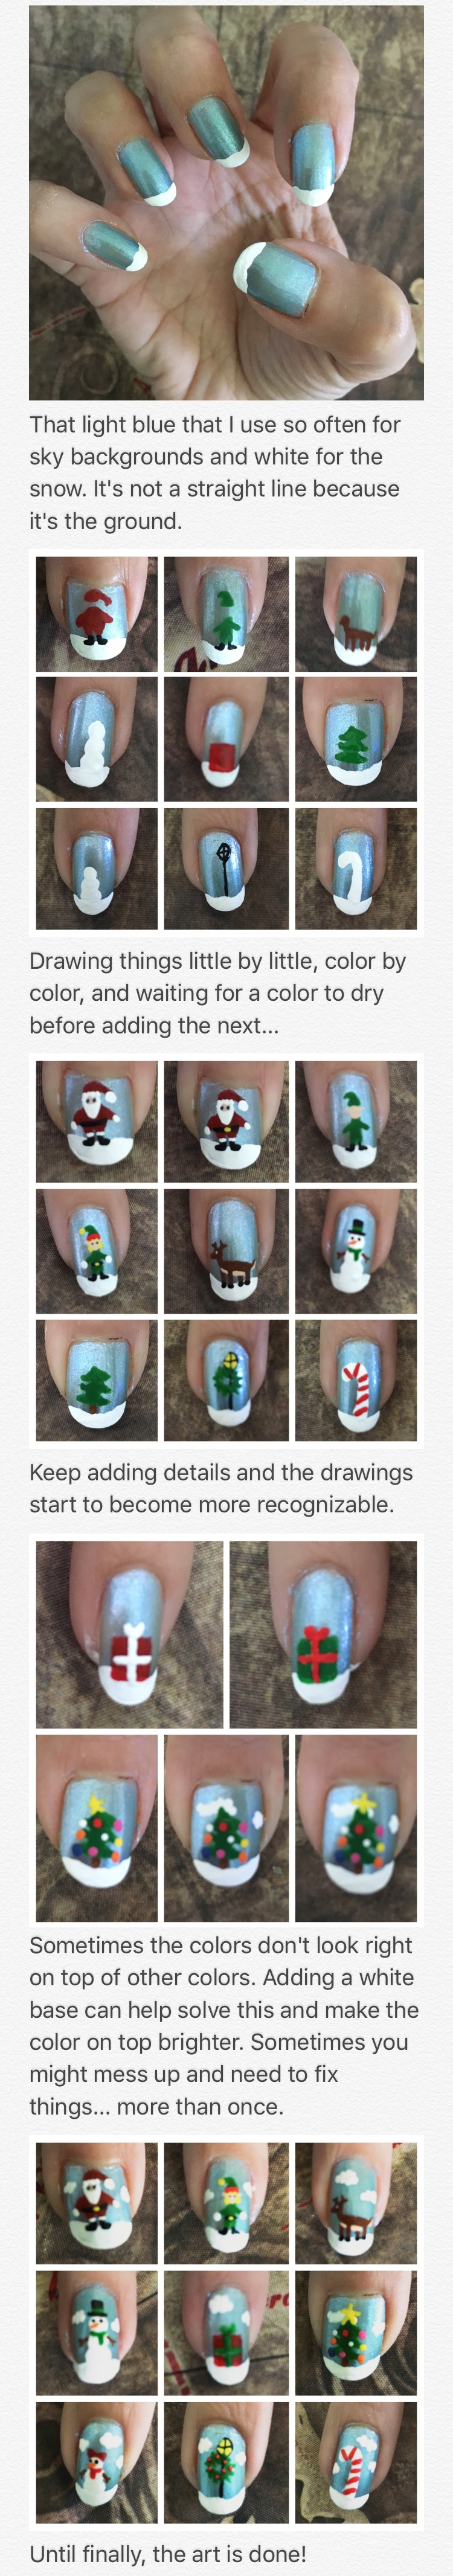 Christmas Nail Art 2016 Process by AzureMikari